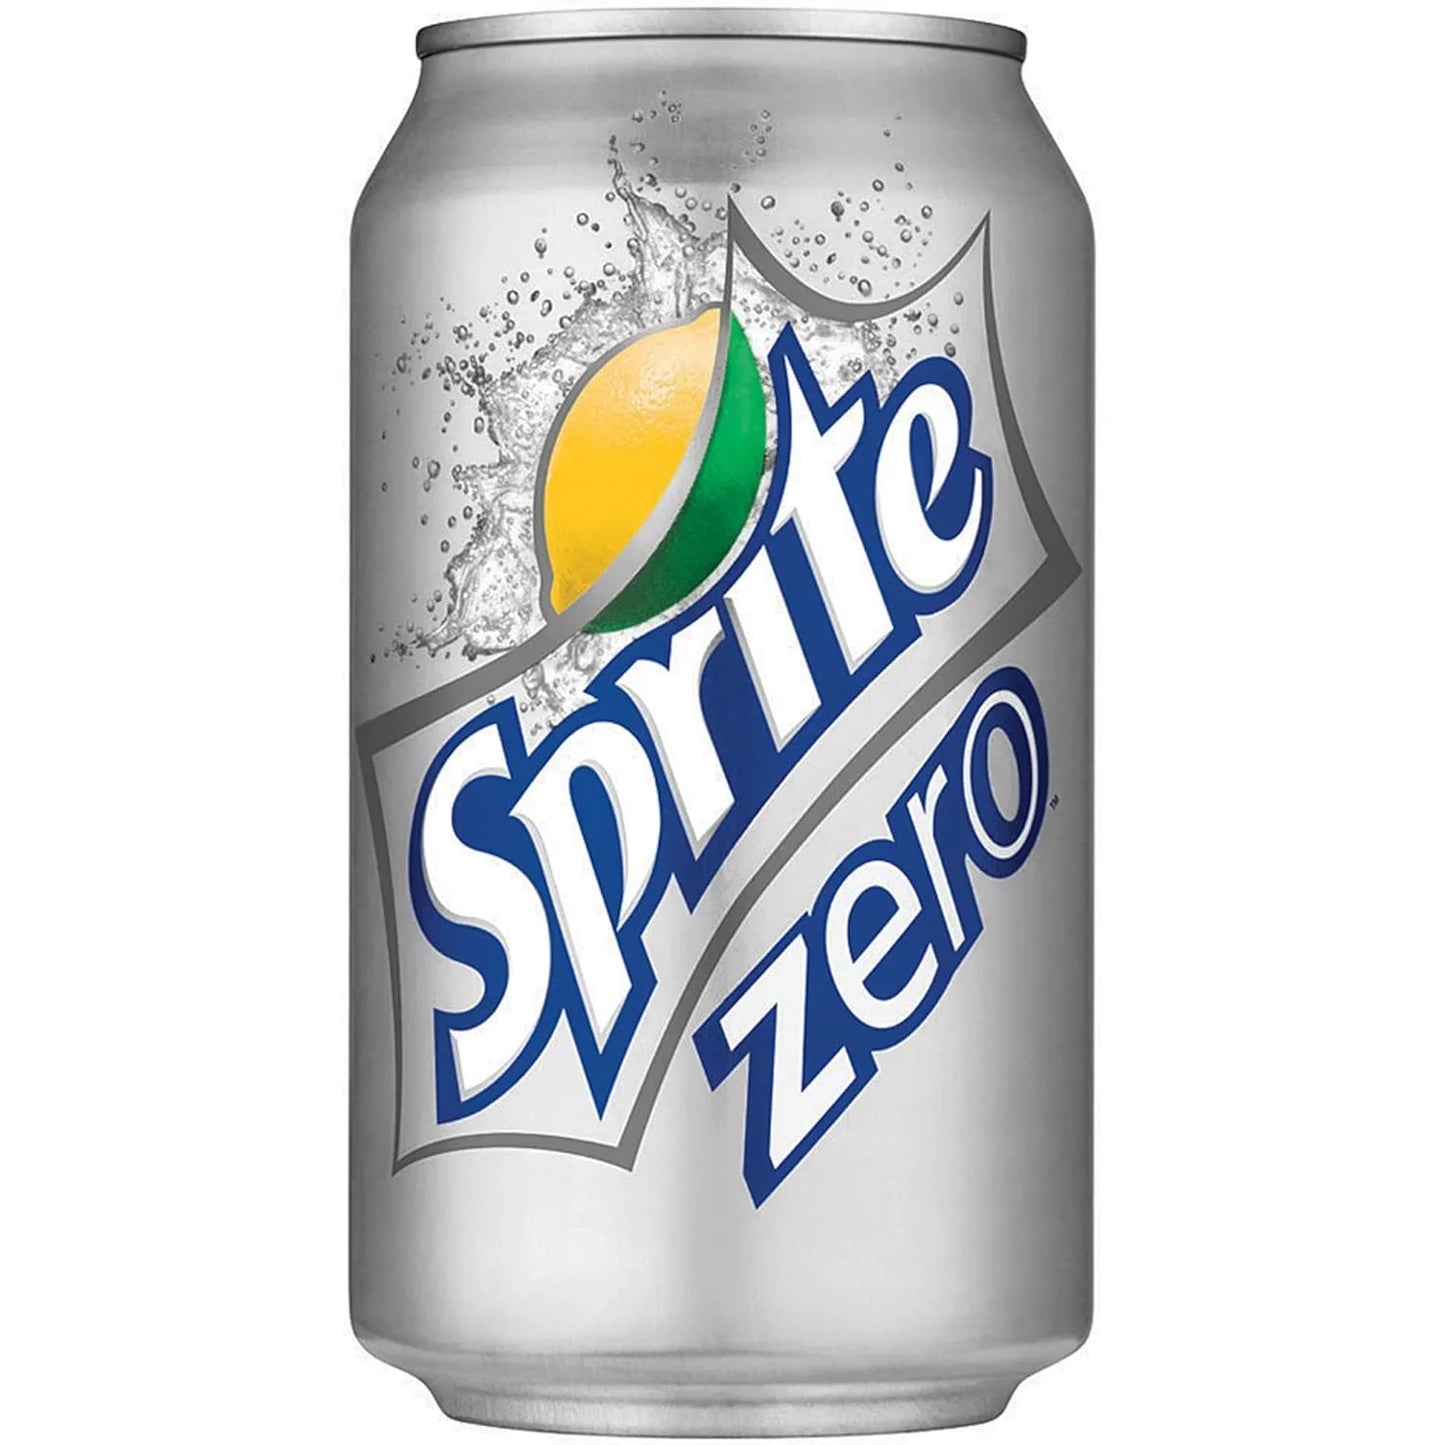 Spirite Zero (can) 12 Oz